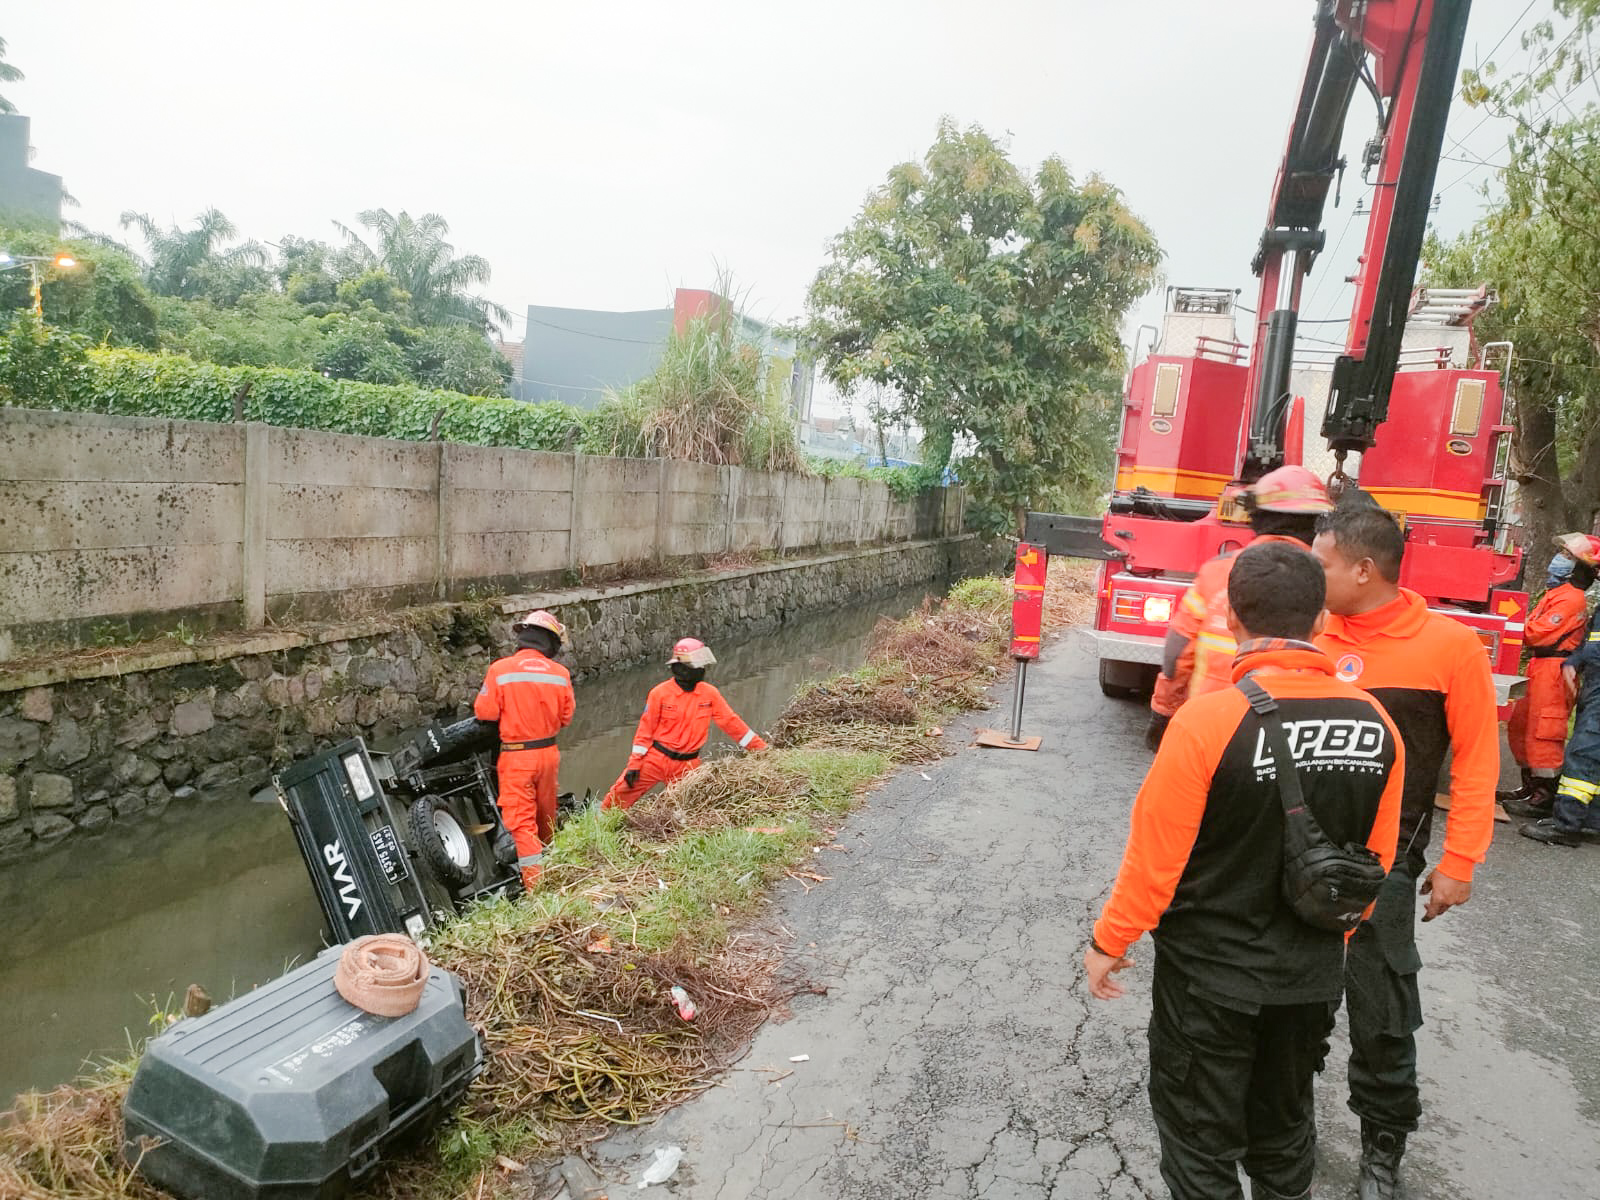 Hindari Mobil, Motor Roda Tiga Pengangkut Makanan Tercebur ke Sungai di Surabaya 